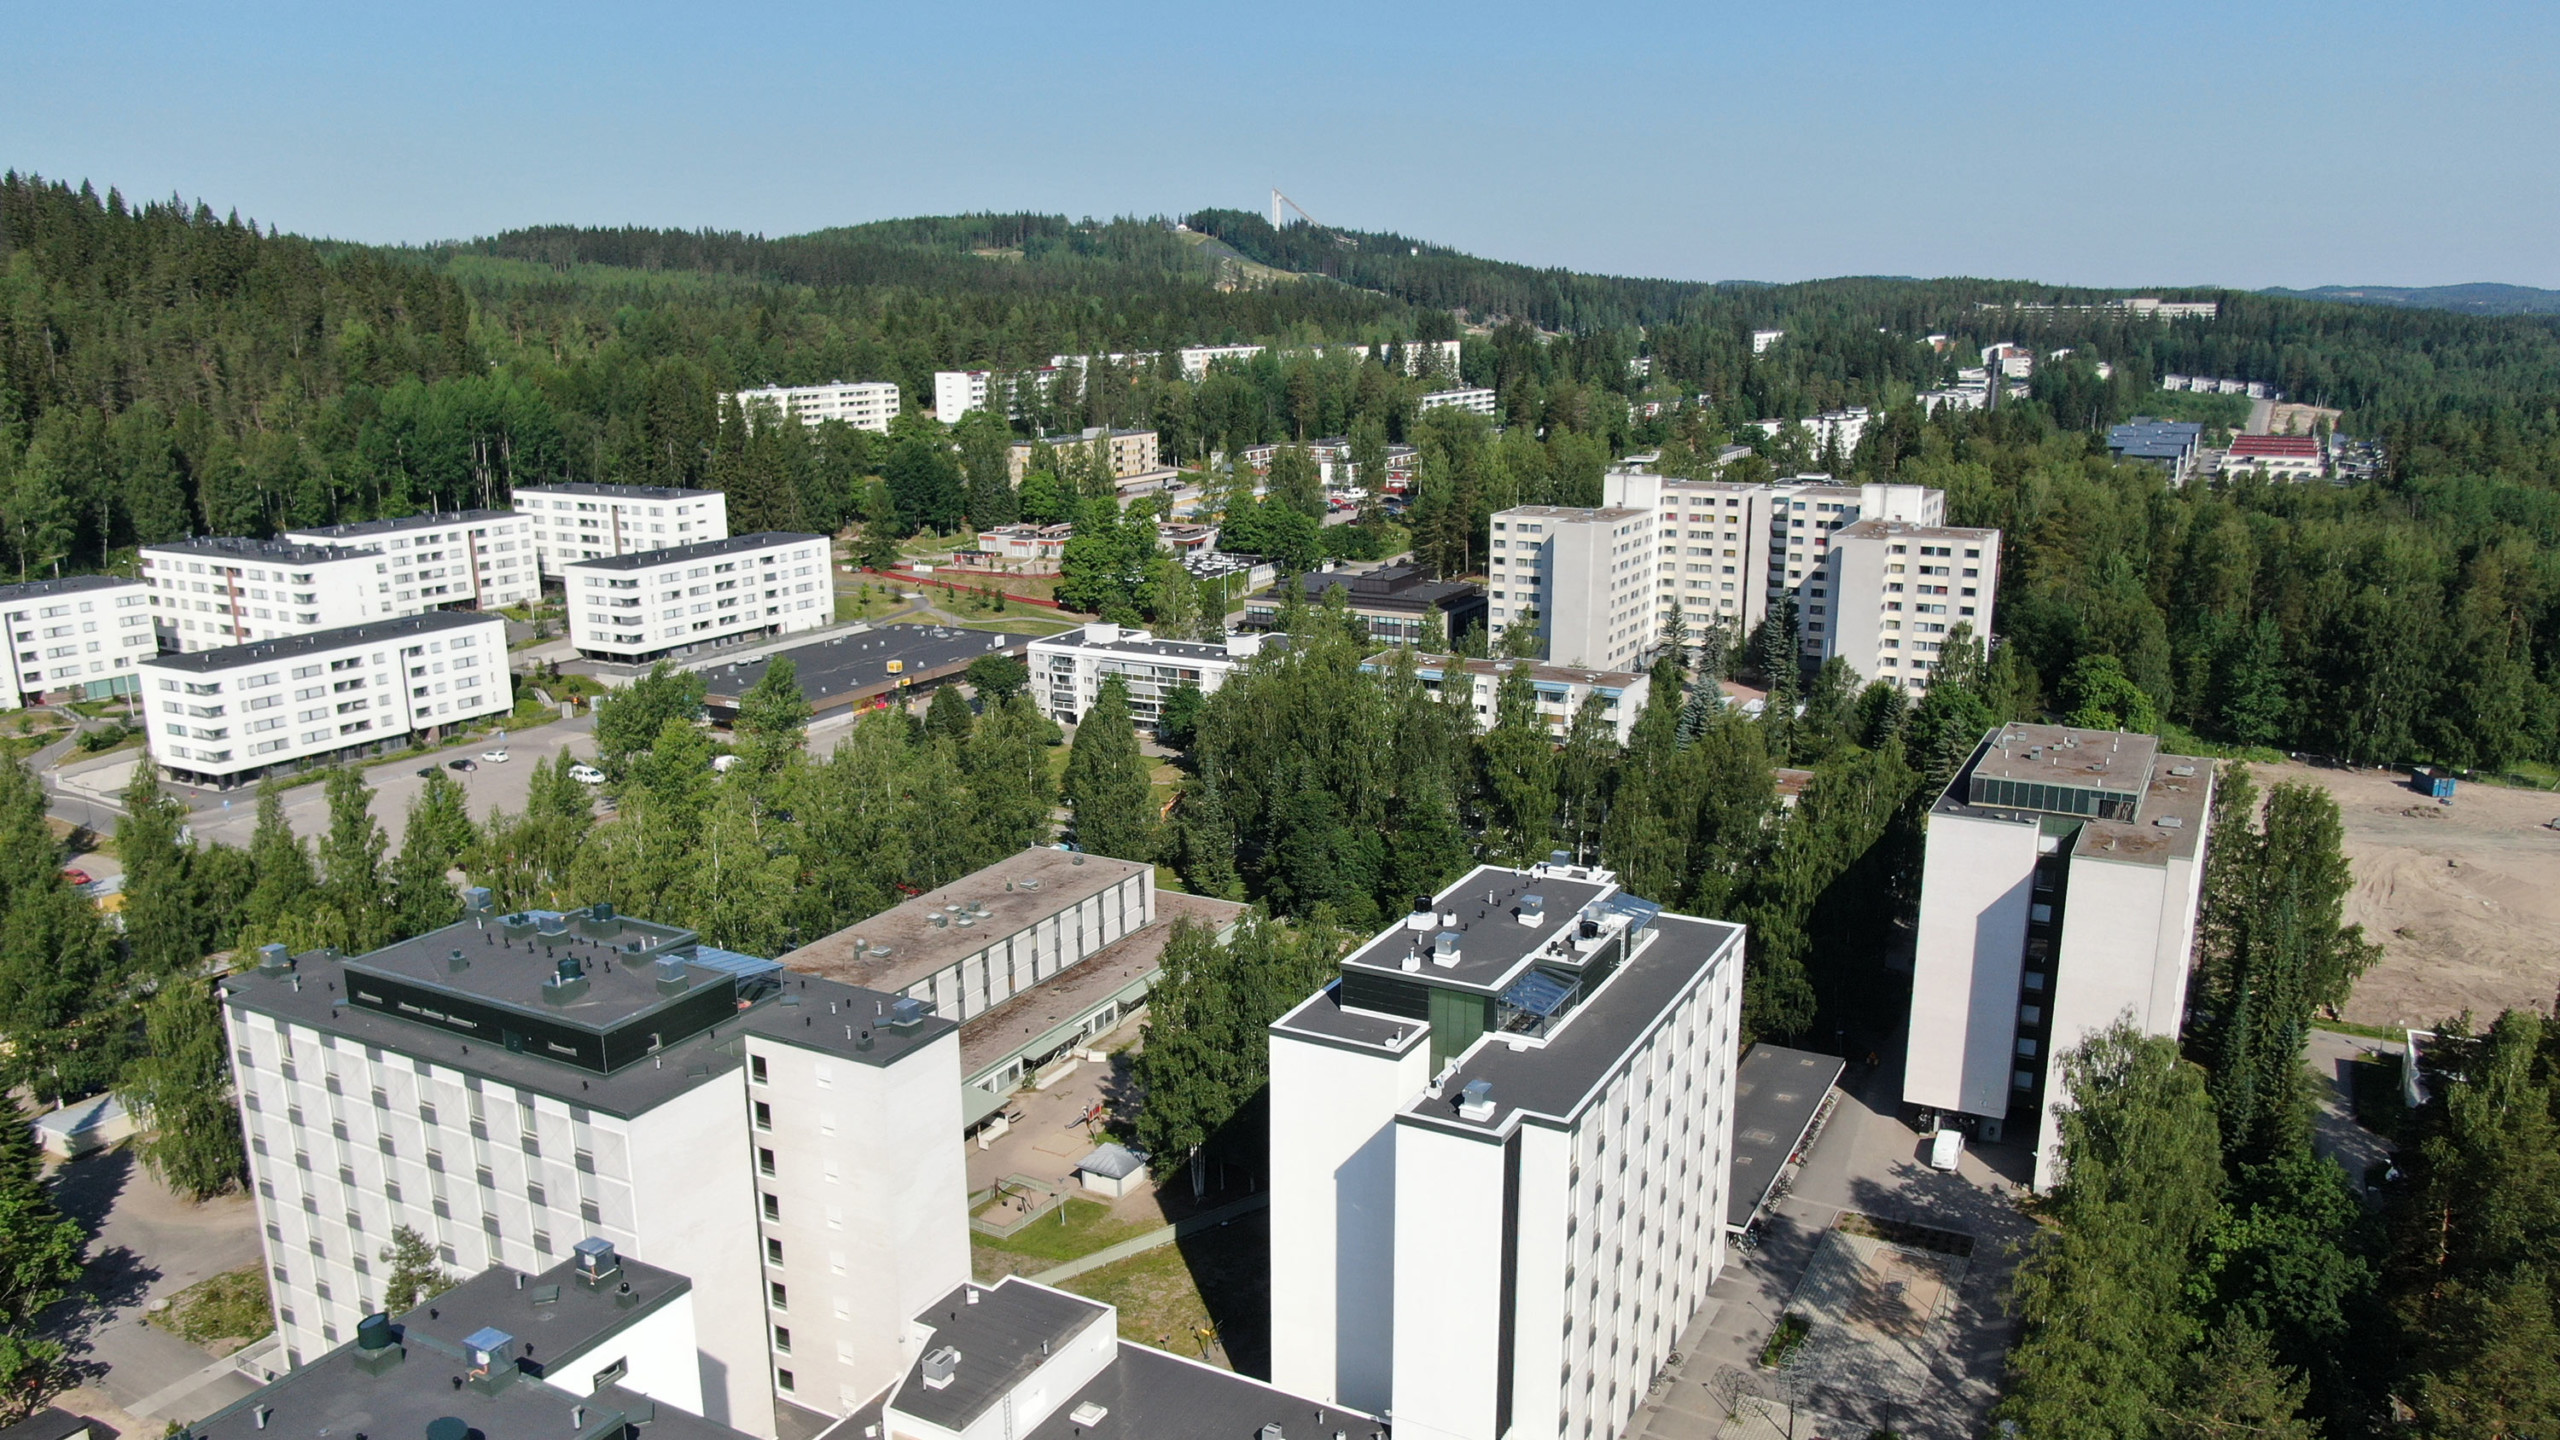 Soihtu Stay - Low budget accommodation in Jyväskylä